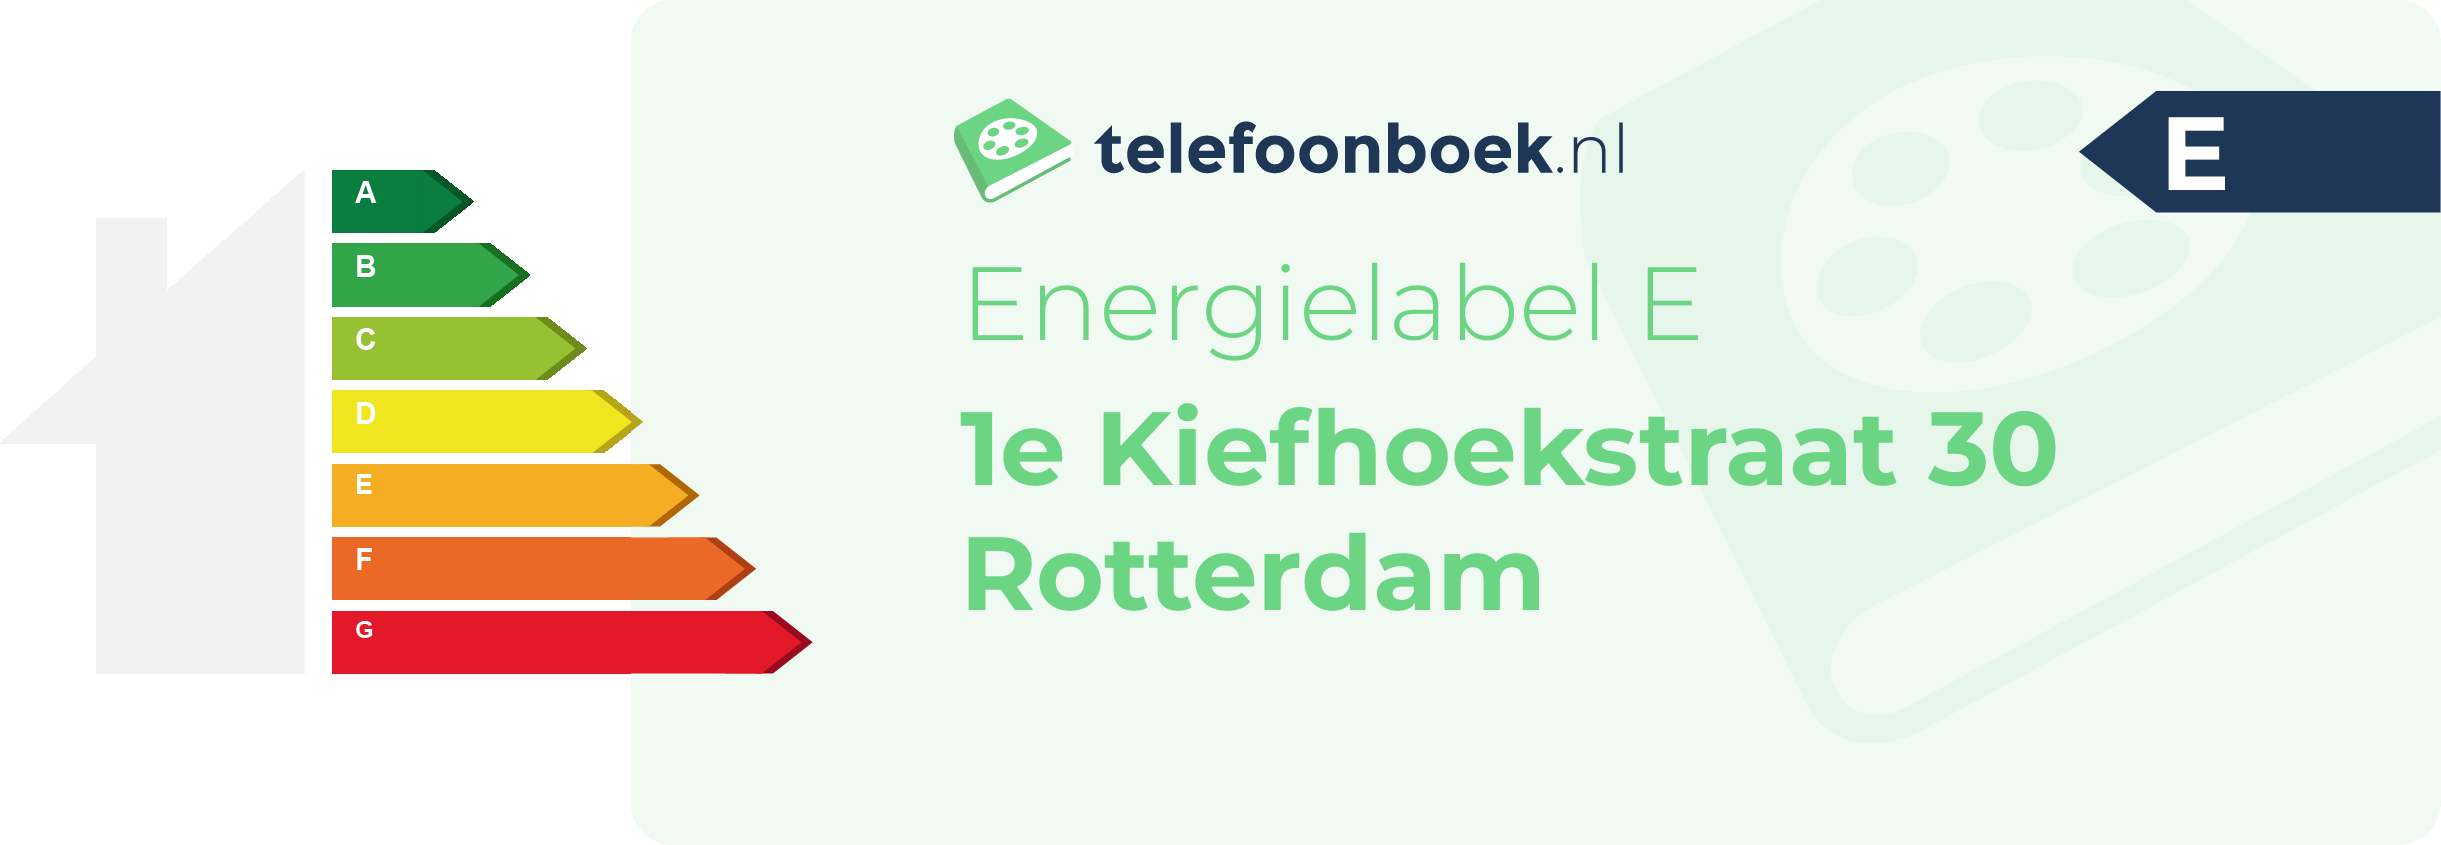 Energielabel 1e Kiefhoekstraat 30 Rotterdam